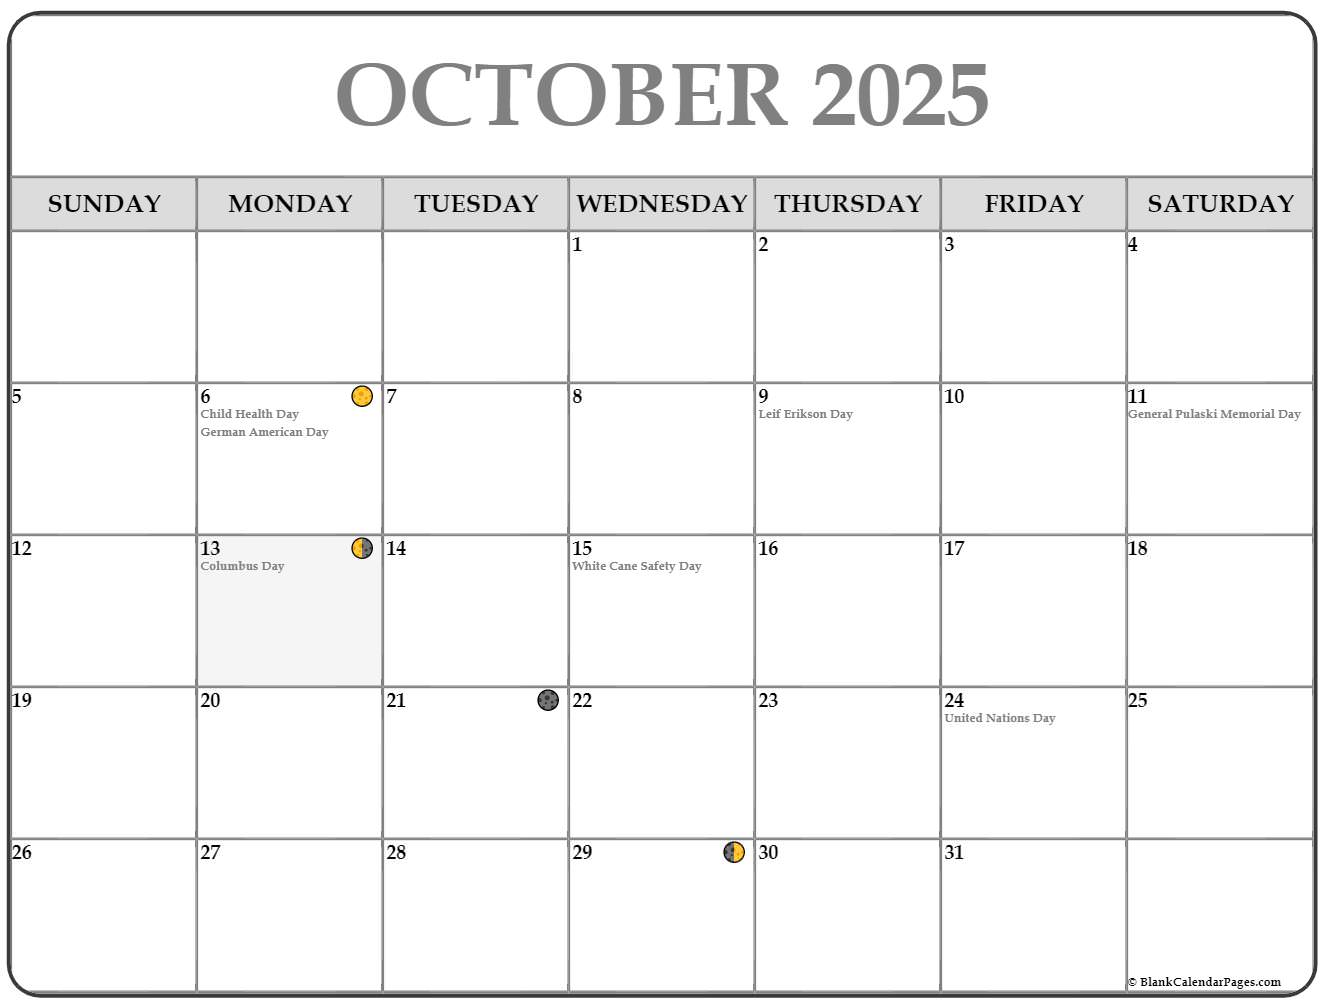 Lunar Phase Calendar 2025 